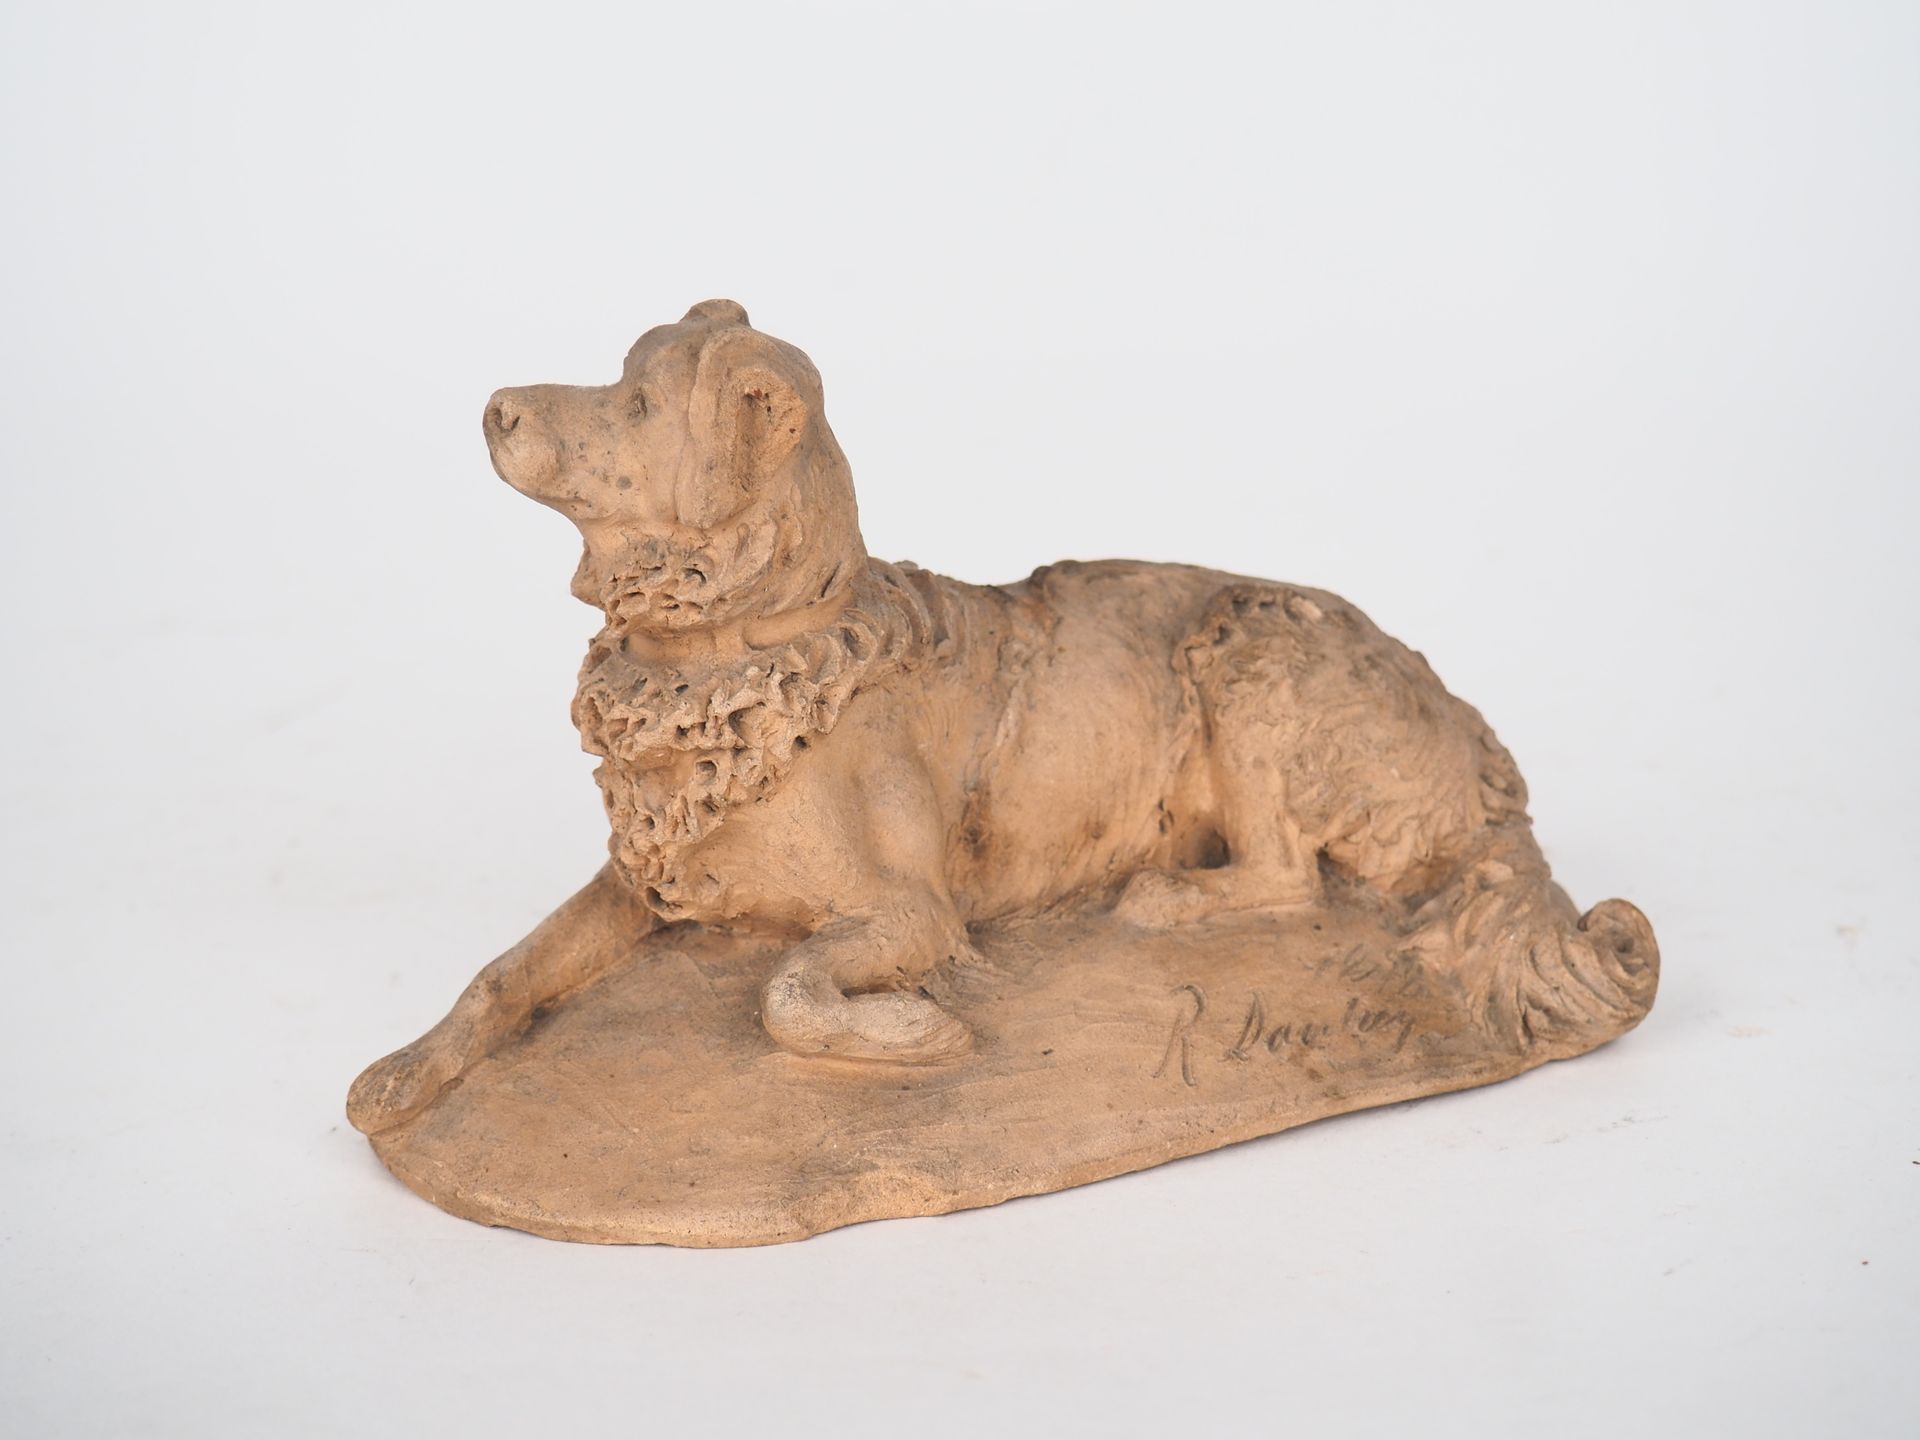 Null 19世纪的原创陶器主题 "躺着的牧羊犬"。

有签名和日期的1872年

尺寸：10 x 17 cm。

(小事故)